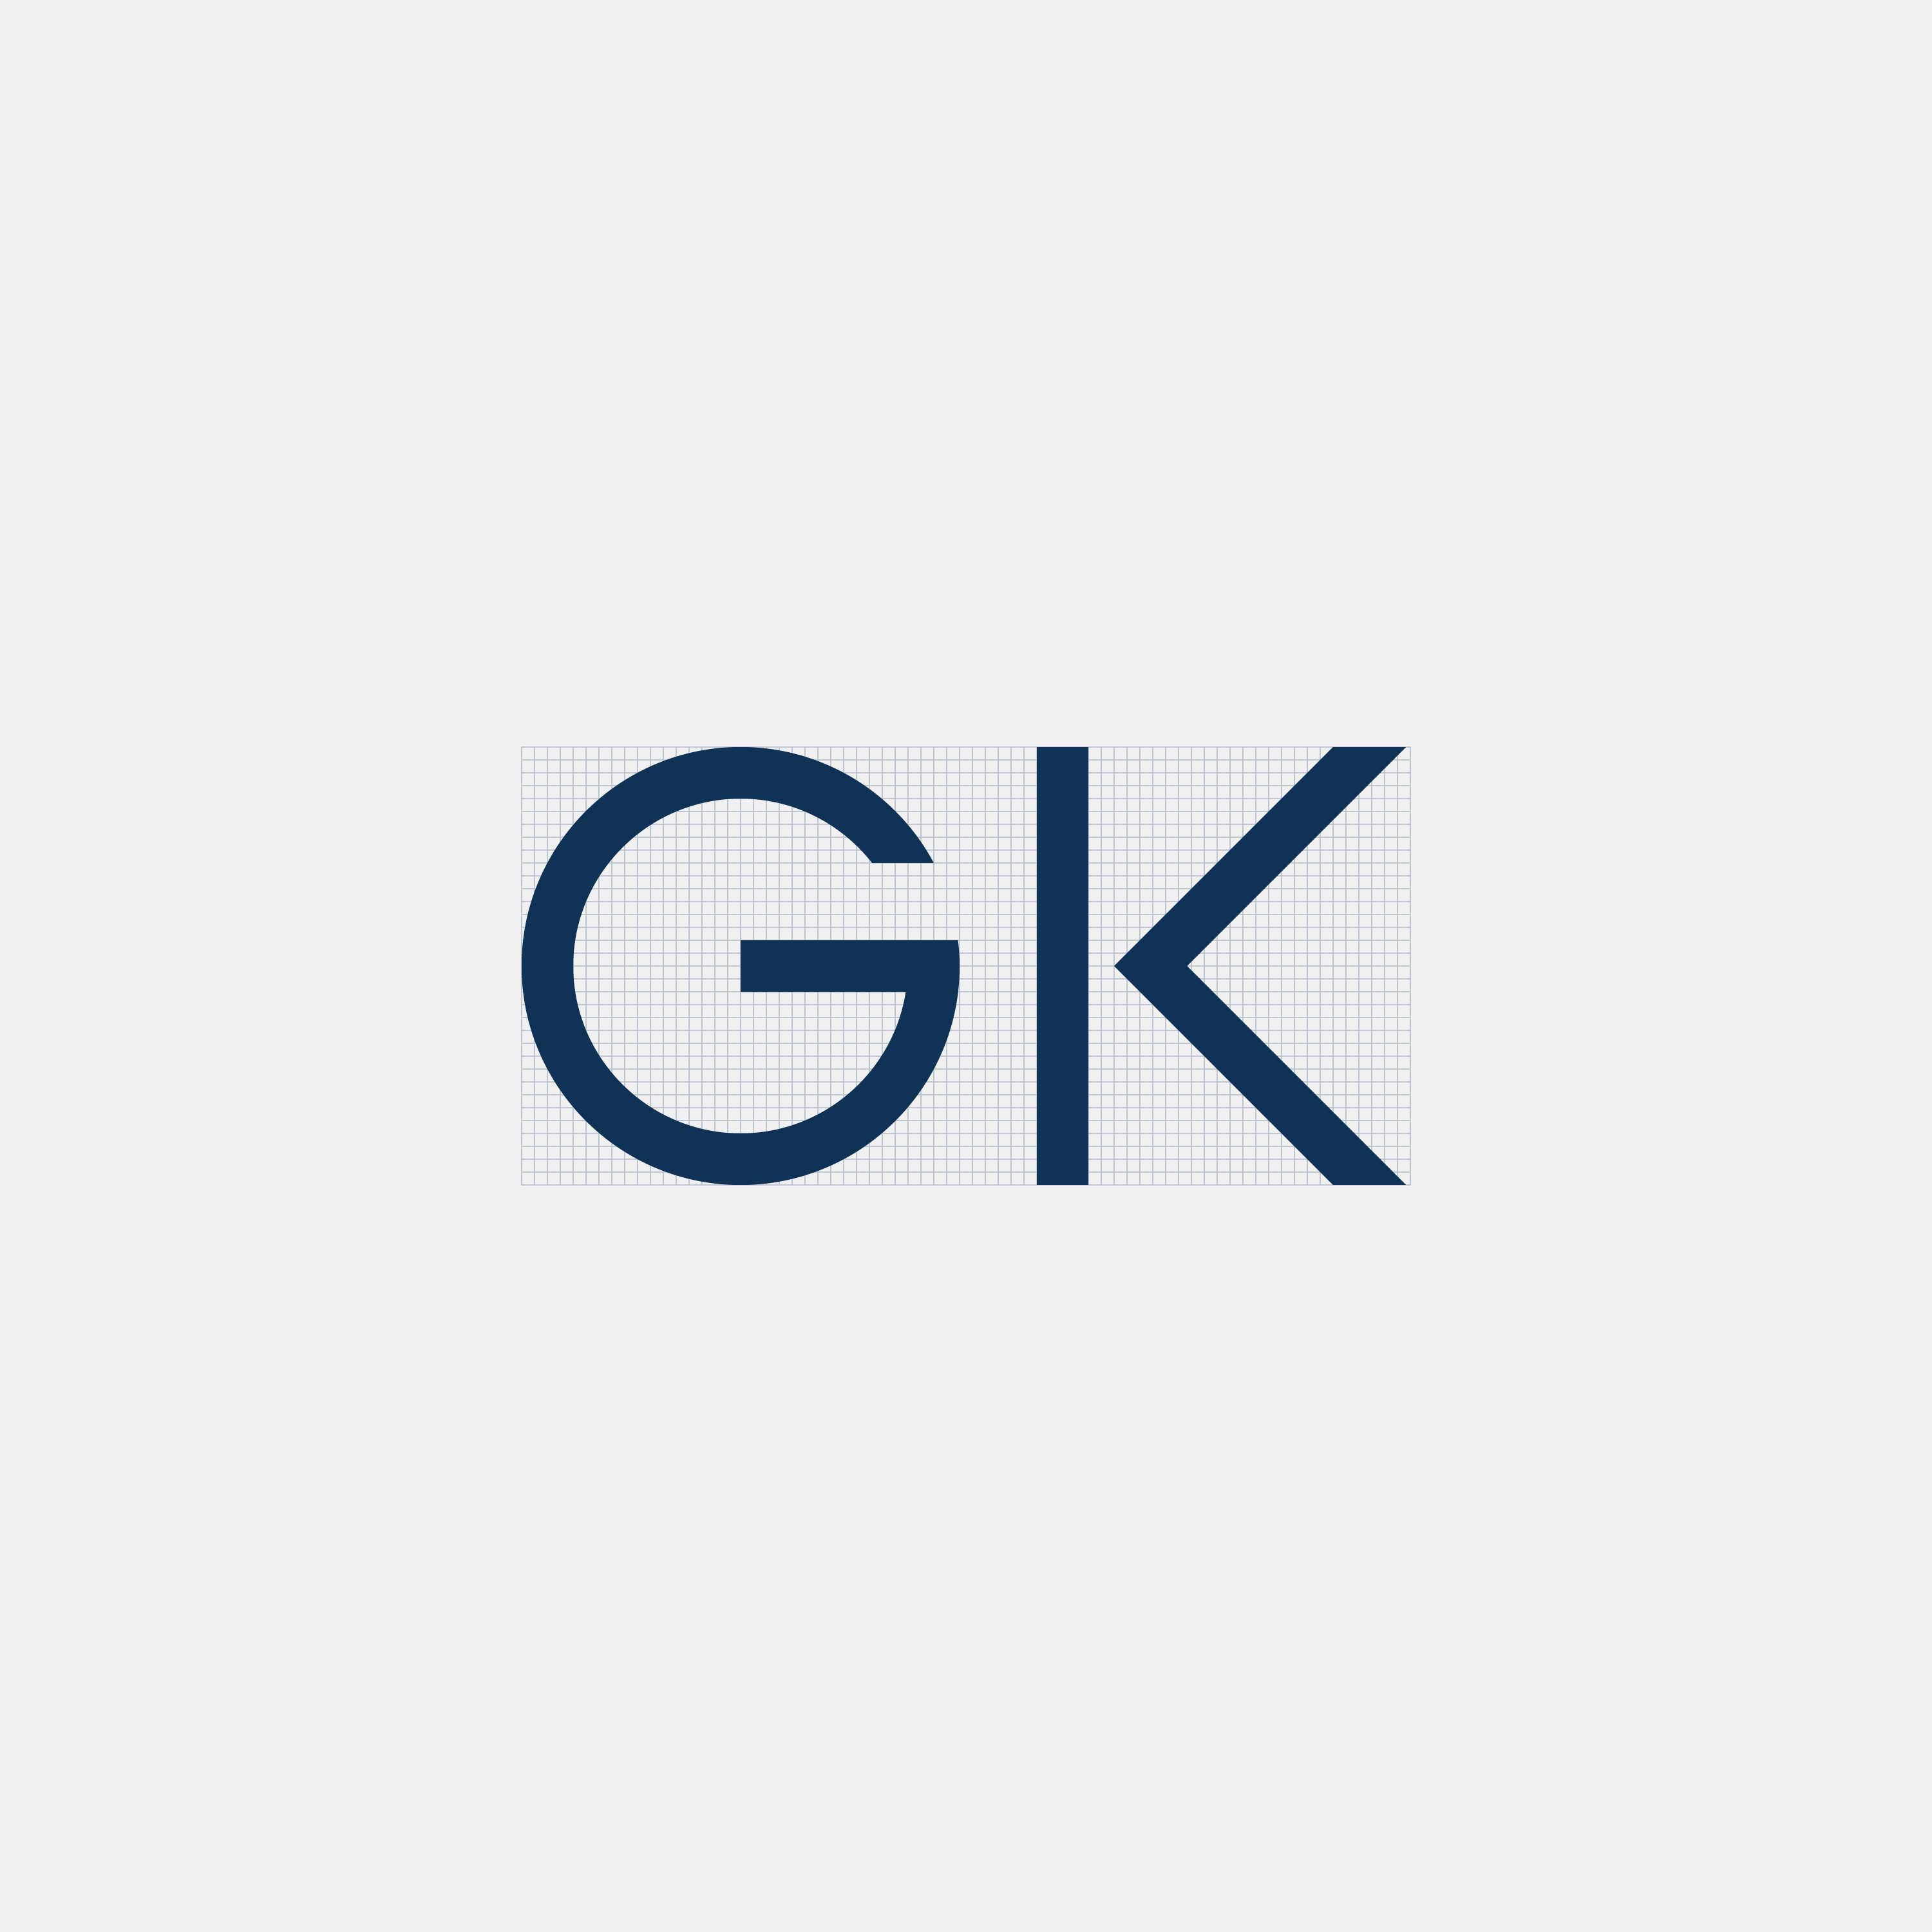 gk_logo_grid